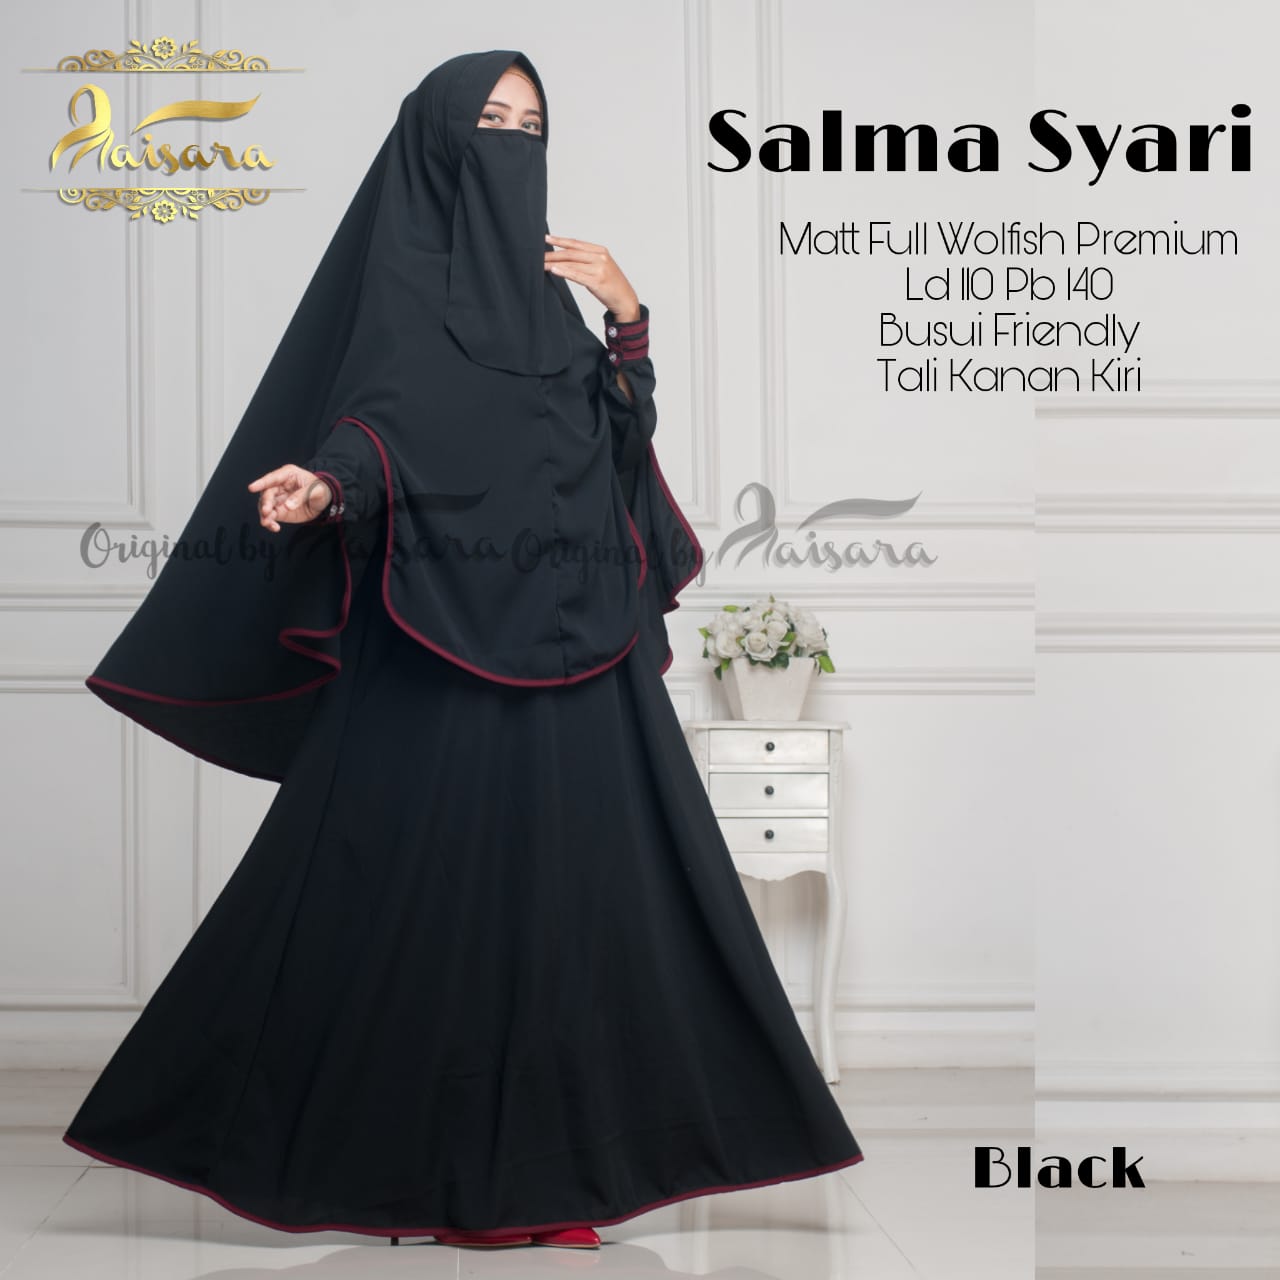 0822-4278-3494 | Bisnis Online Baju Muslim | Nabiilah Store